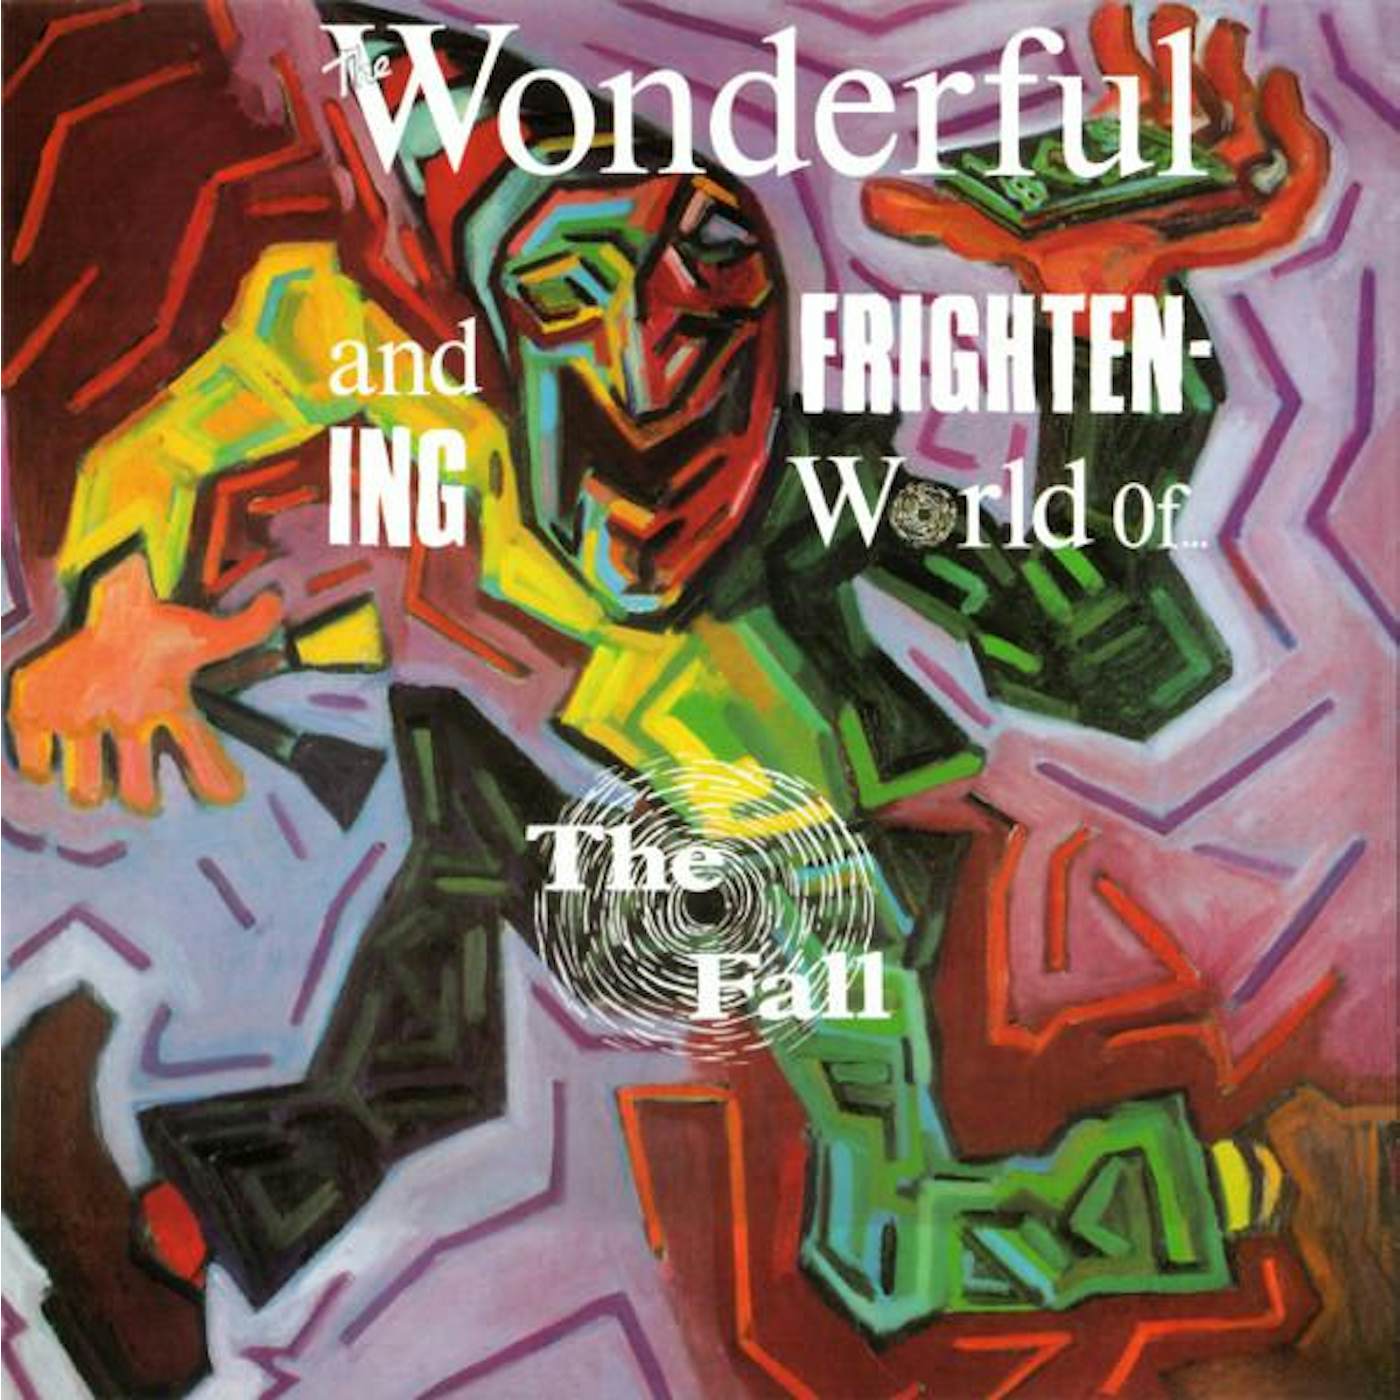 WONDERFUL & FRIGHTENING WORLD OF The Fall Vinyl Record